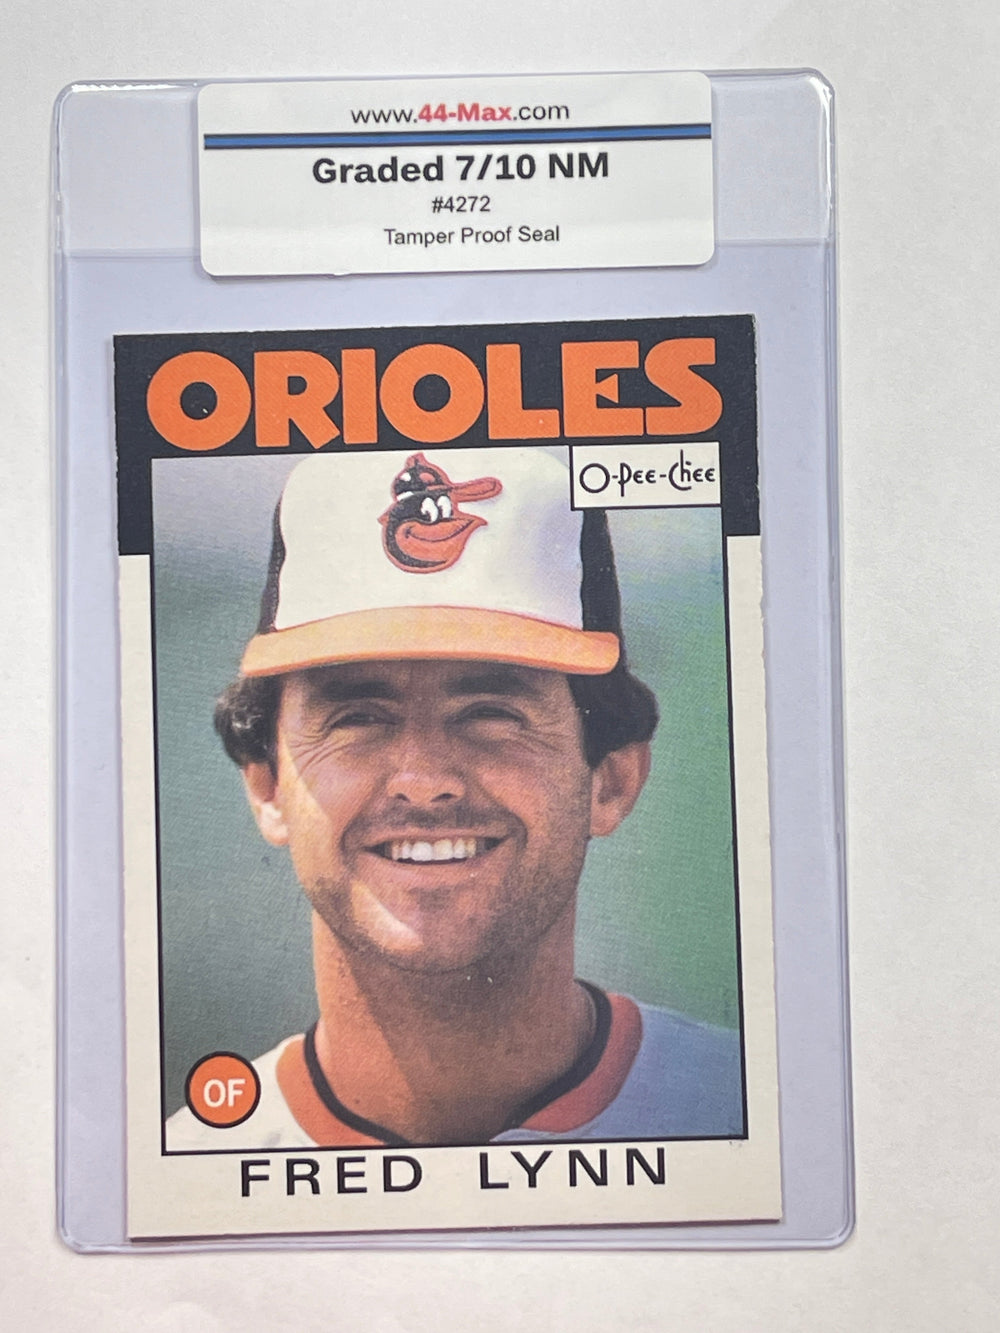 Fred Lynn 1986 O-Pee-Chee Baseball Card. 44-Max 7/10 NM #4272